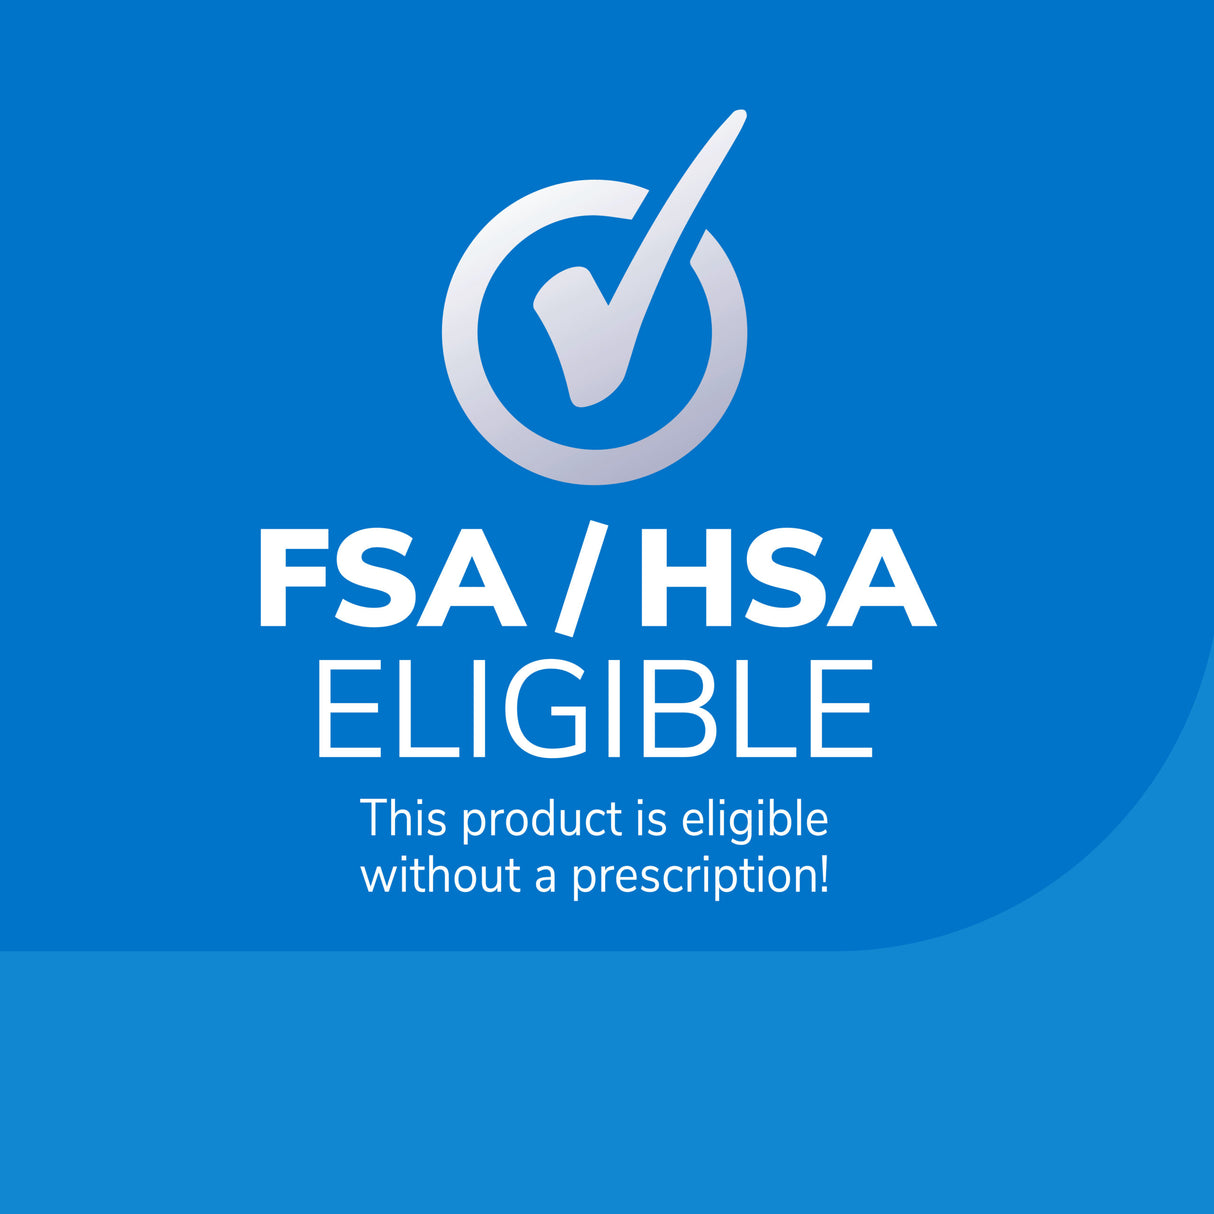 image of fsa hsa eligible